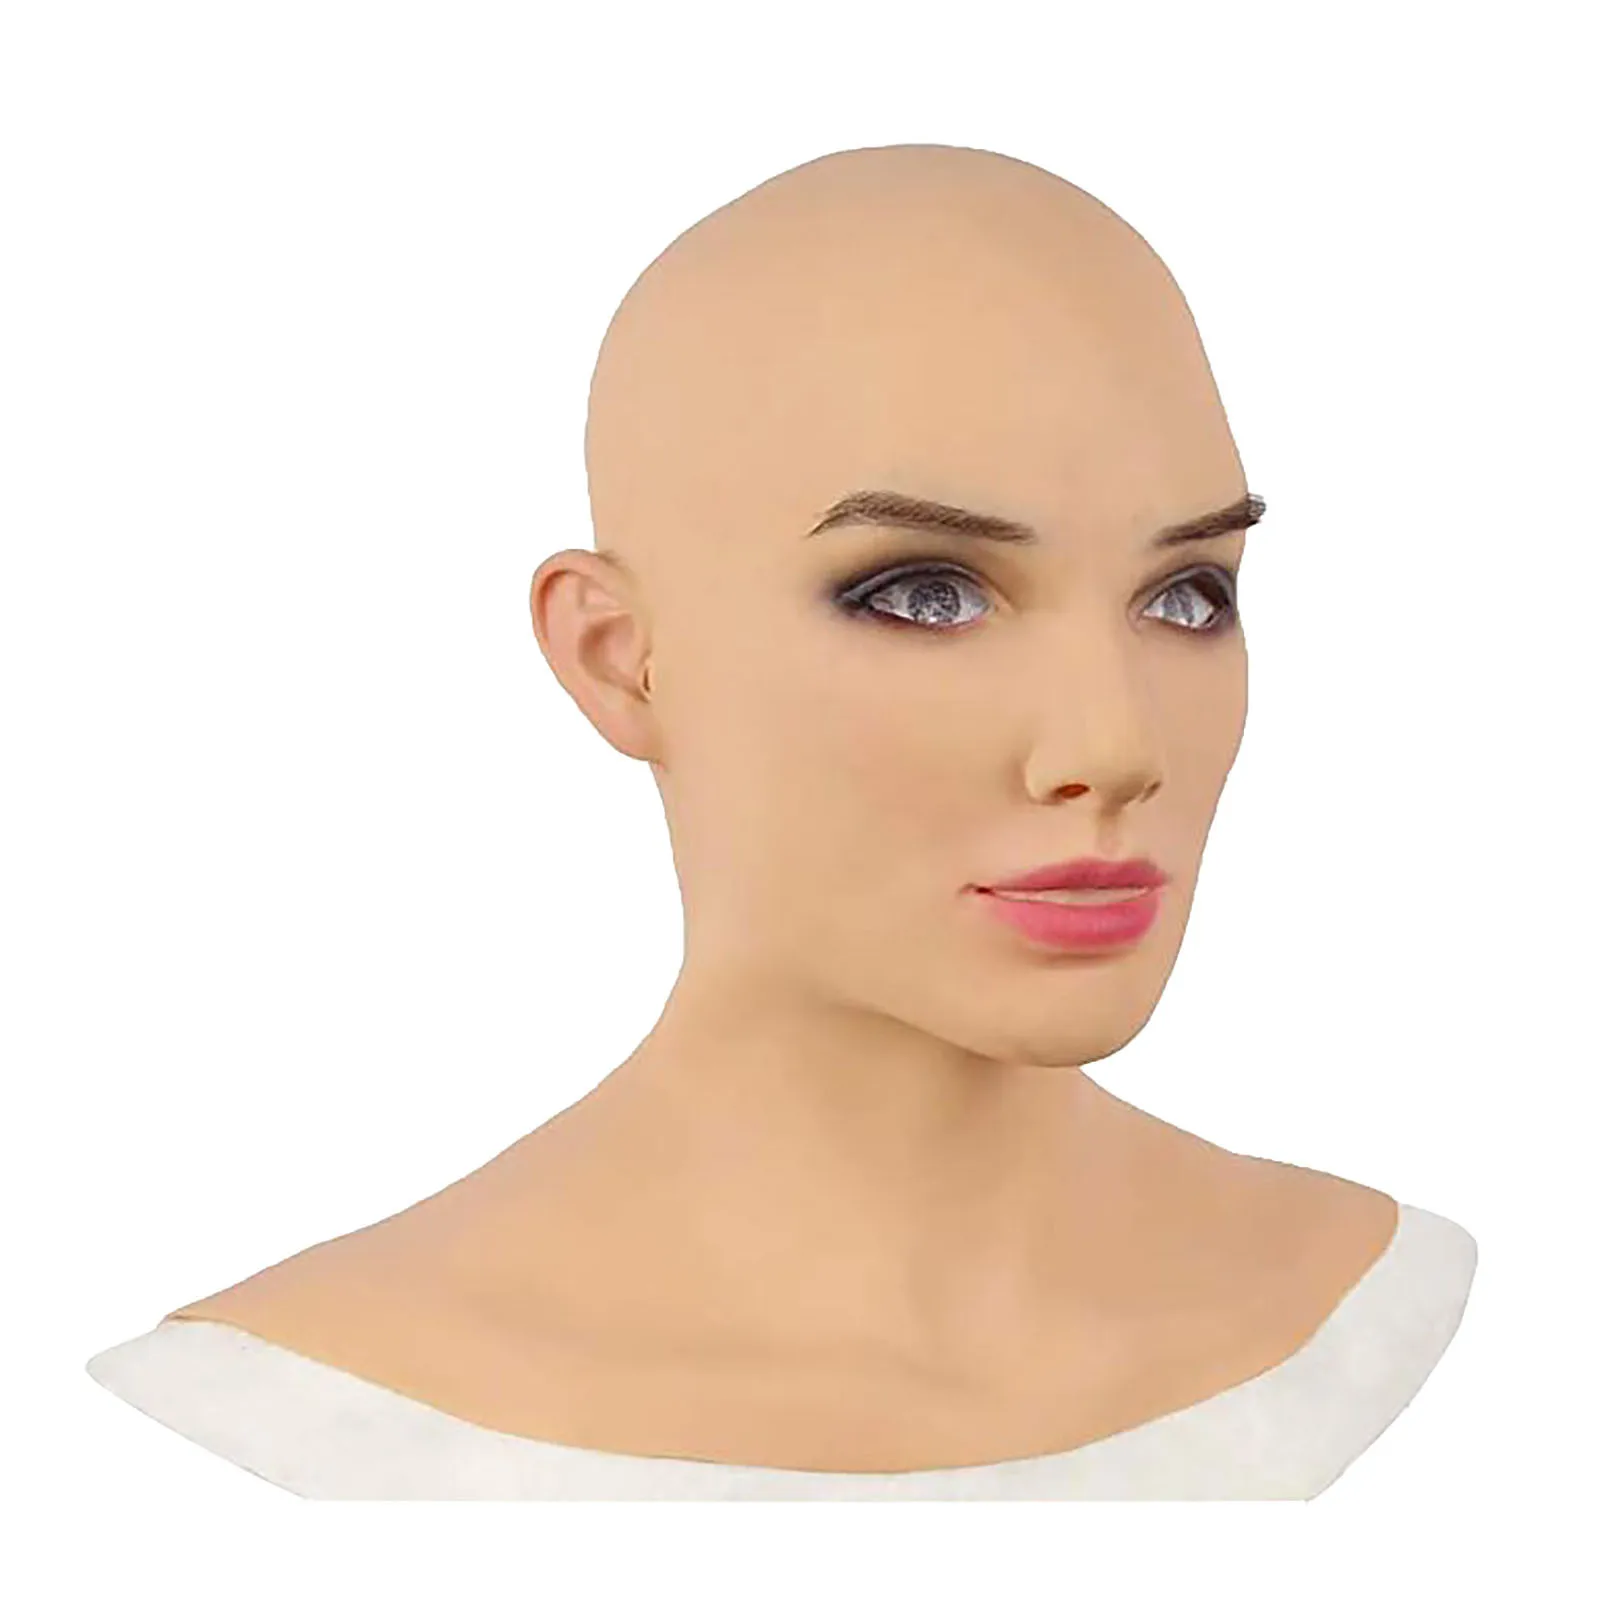 Silicone Full Head Mask para Adulto, Chapelaria em Forma Feminina, Crossdresser Acessório, Halloween Cosplay, Alta Qualidade